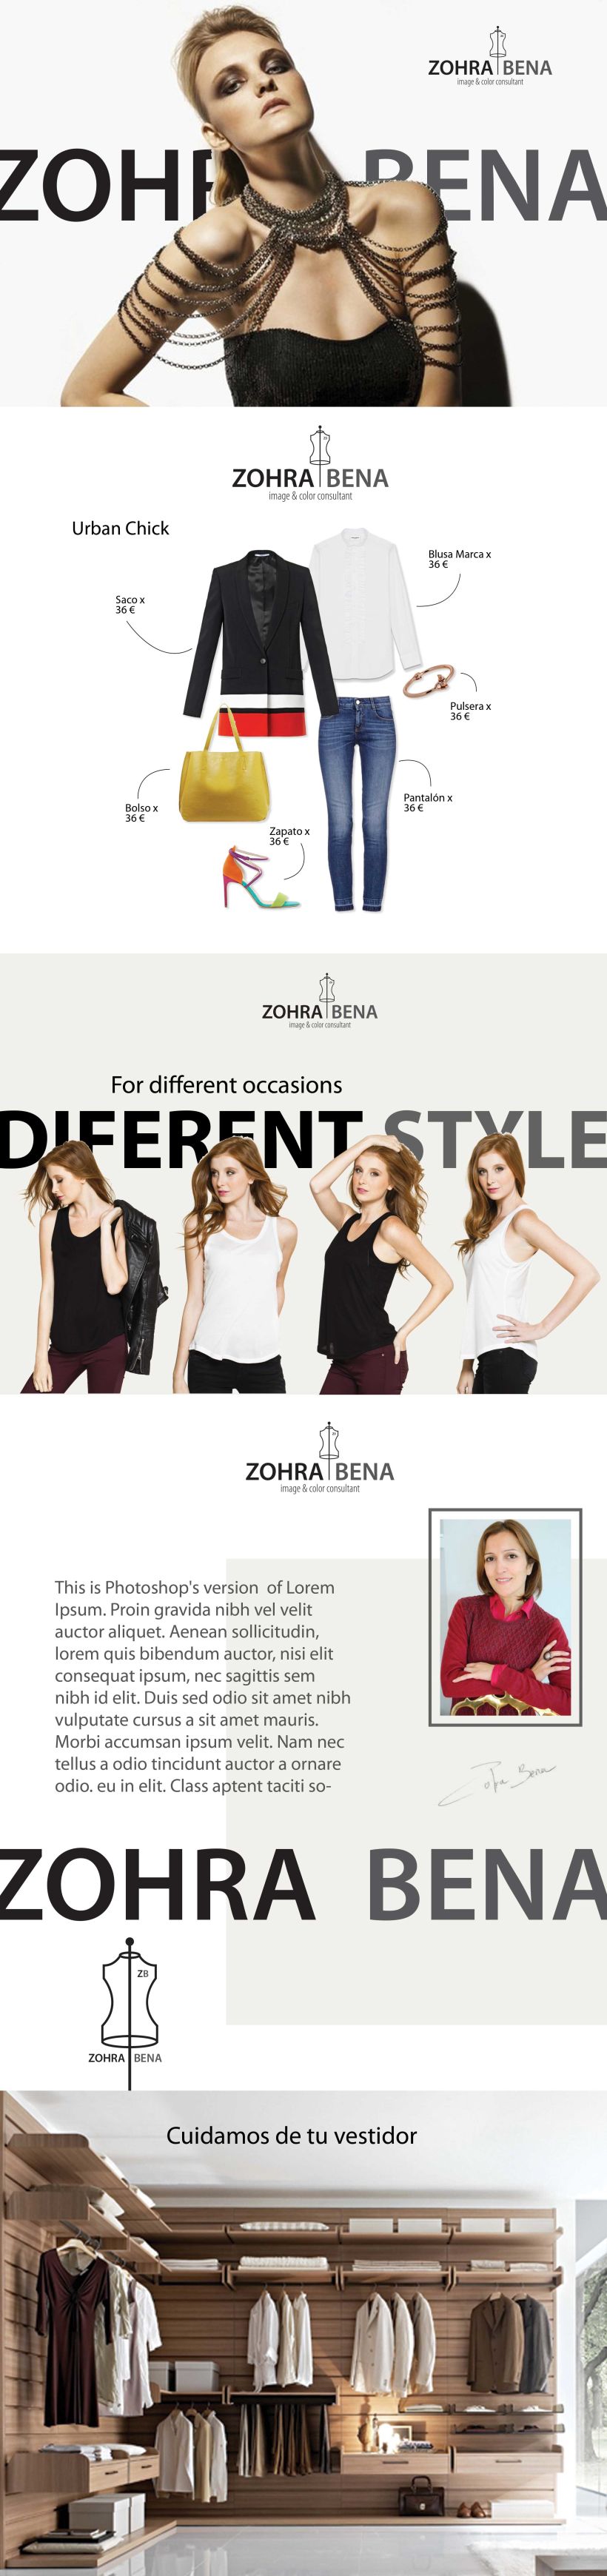 Zohra Bena - Identidad Corporativa - Logo 0